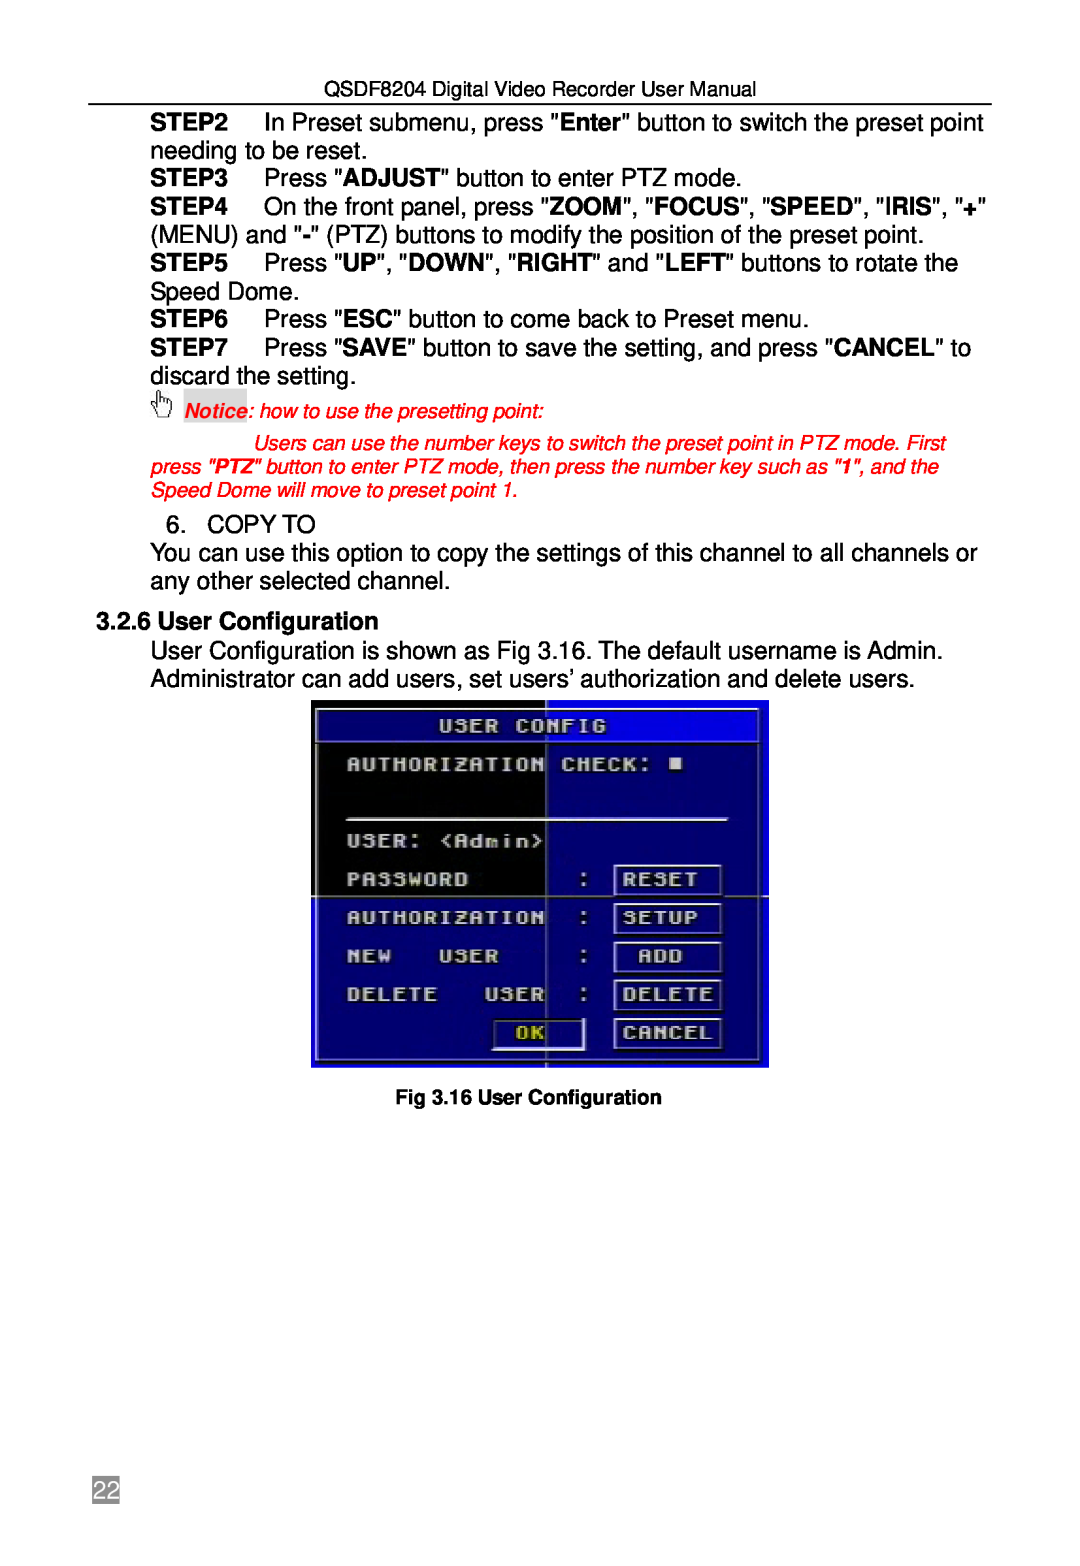 Q-See QSDF8204 user manual User Configuration 